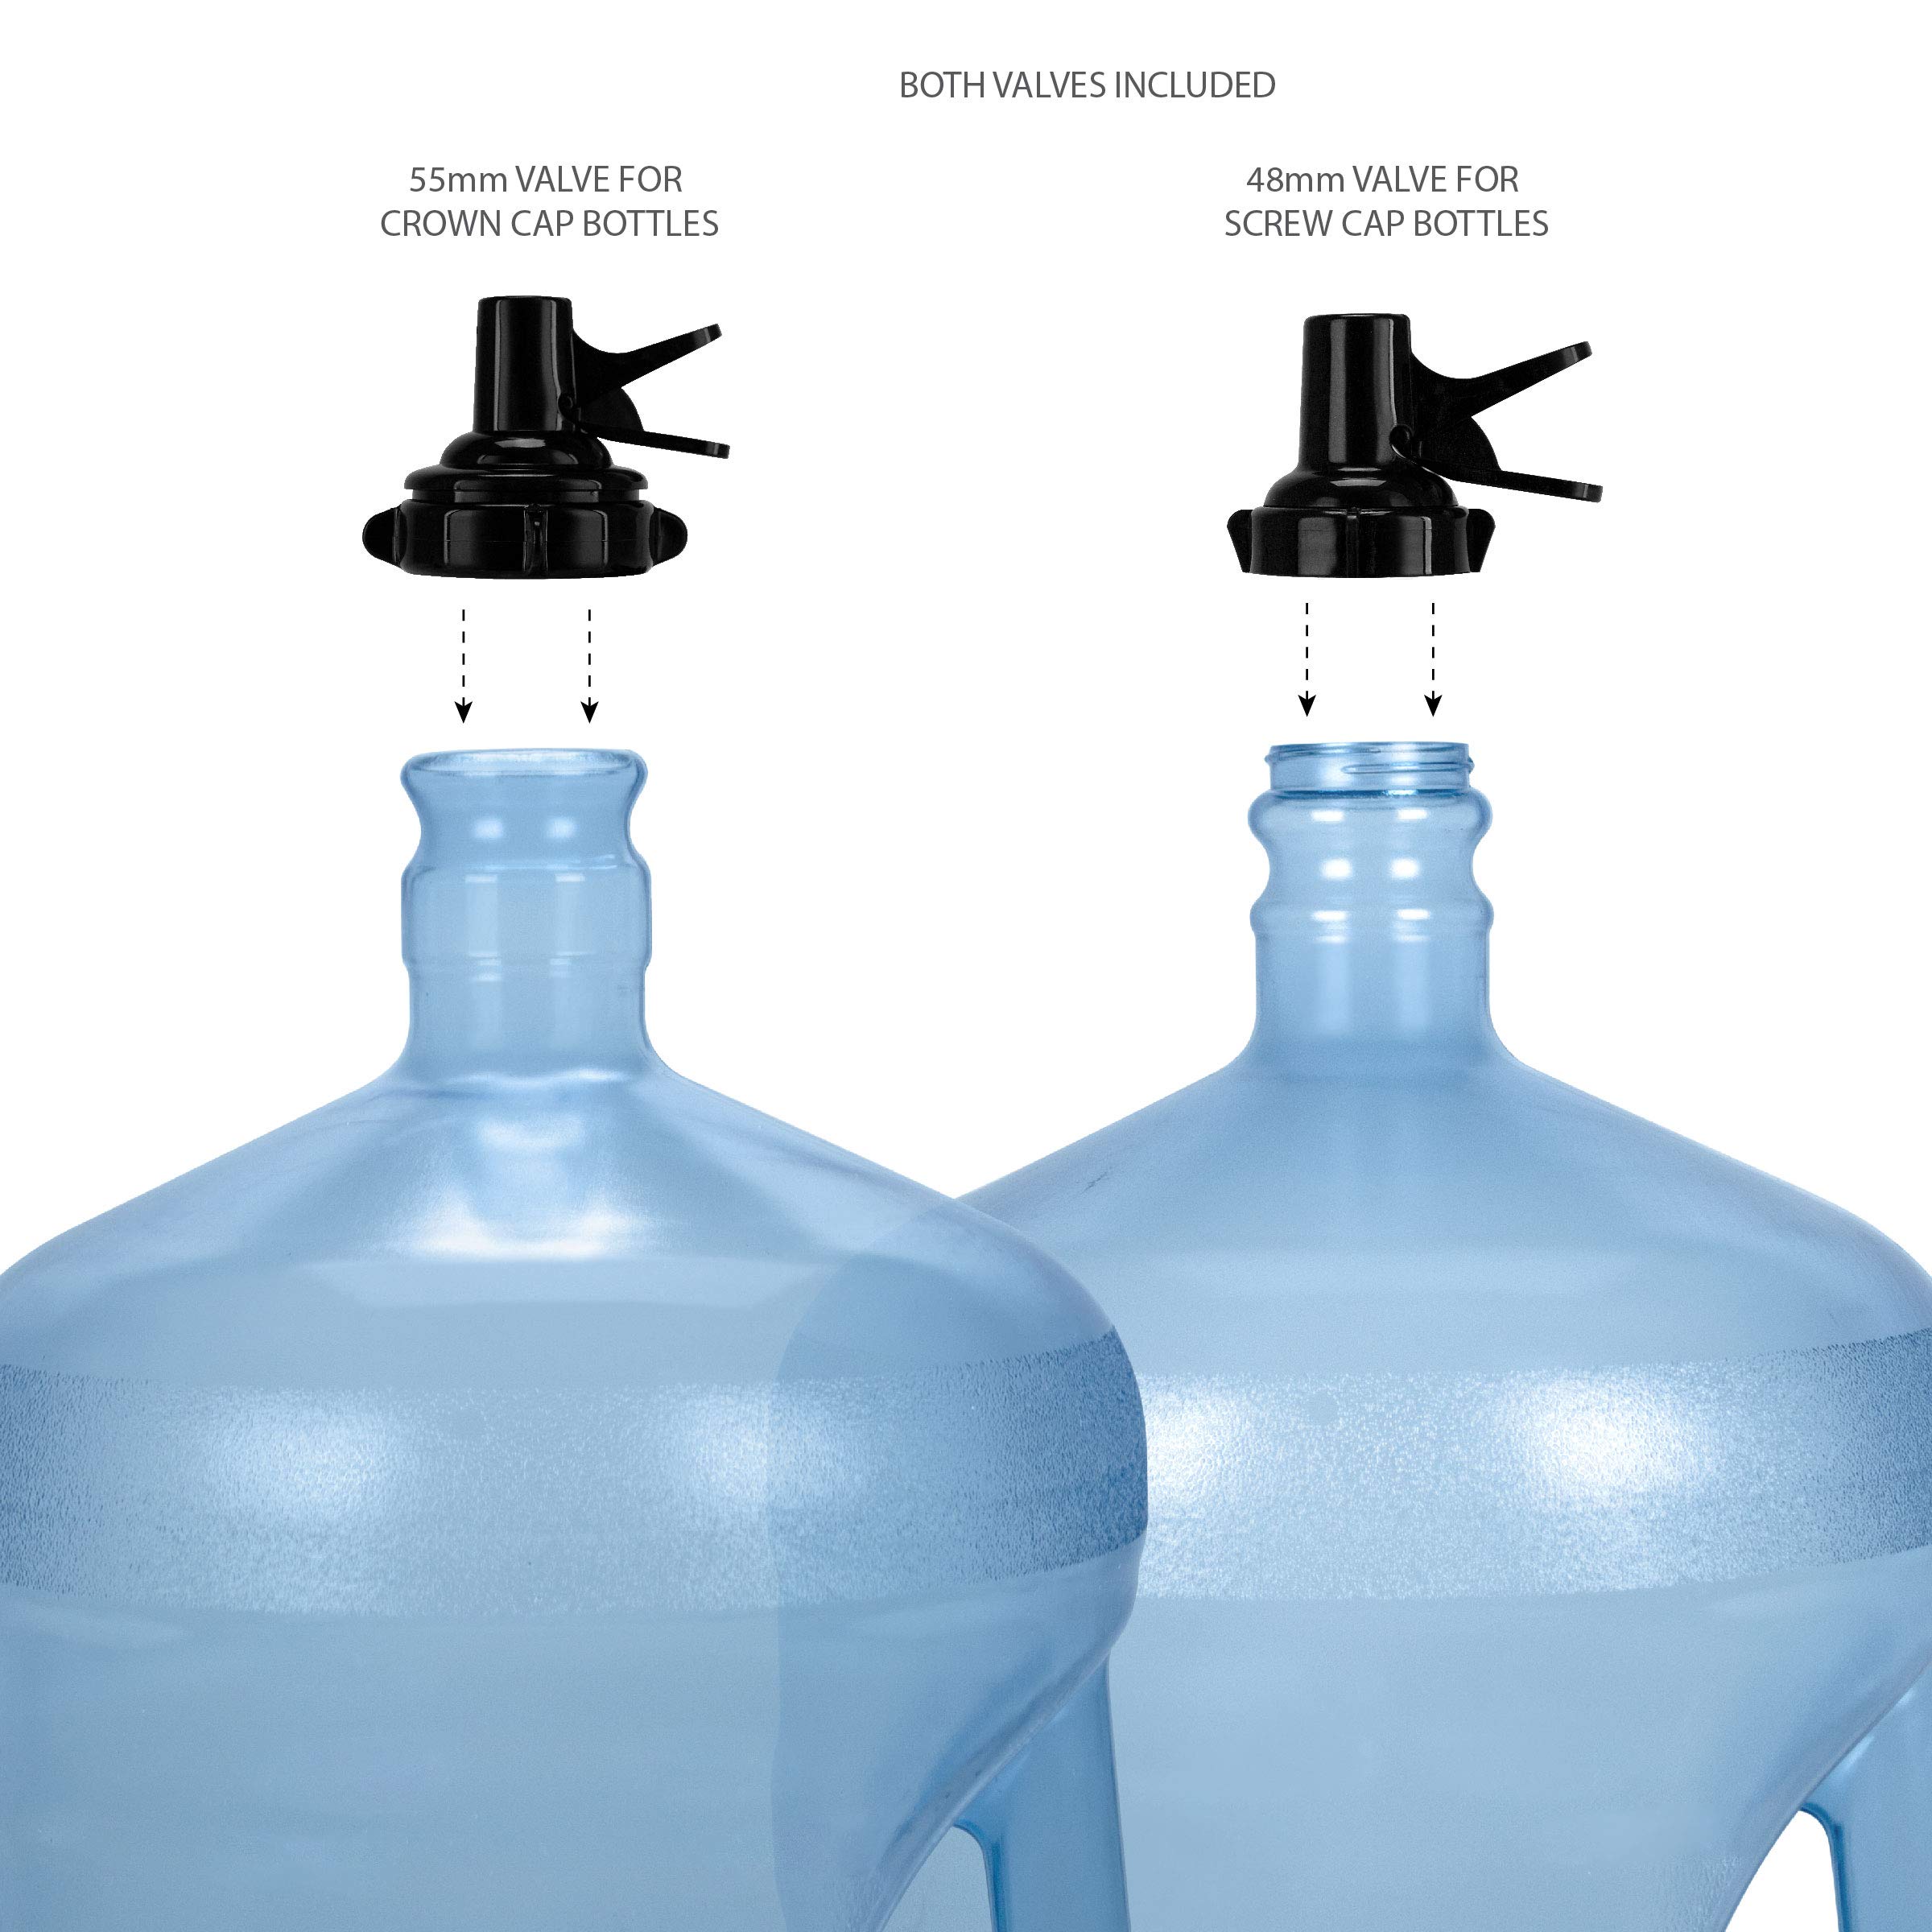 Brio 5 Gallon Water Bottle Jug Drink Dispenser Storage Cooler Foldable Cradle Stand BPA FREE Valves Stainless Steel Rack Holder No Leak Non Slip Countertop with 2 Dispenser Valves, Fits BOTH 48mm and